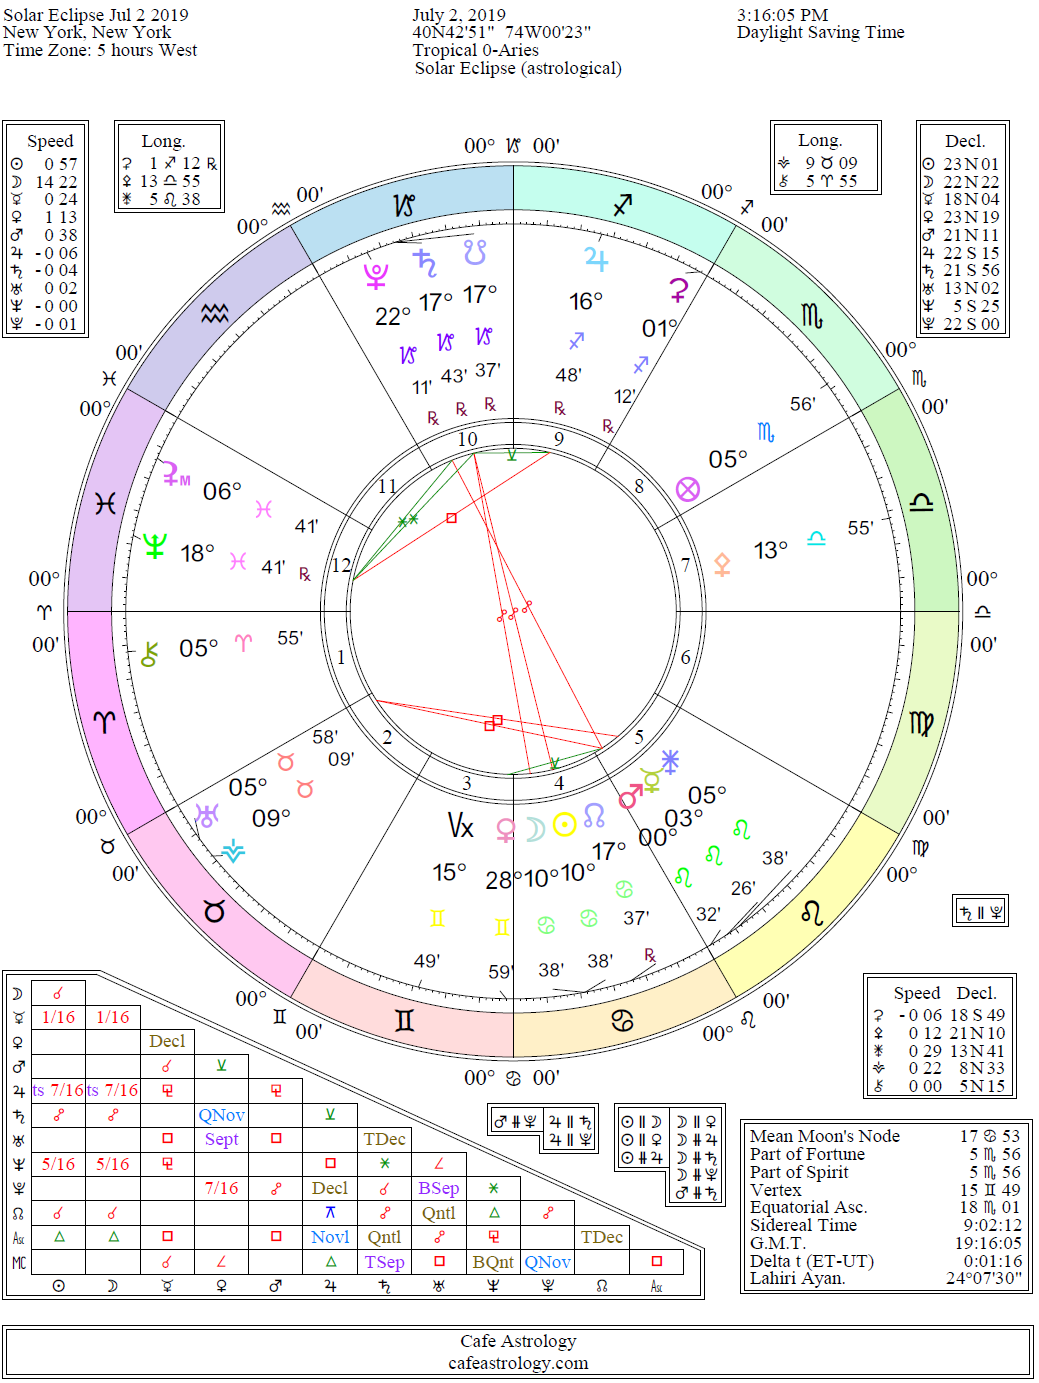 2019 Planetary Overview | Cafe Astrology .com